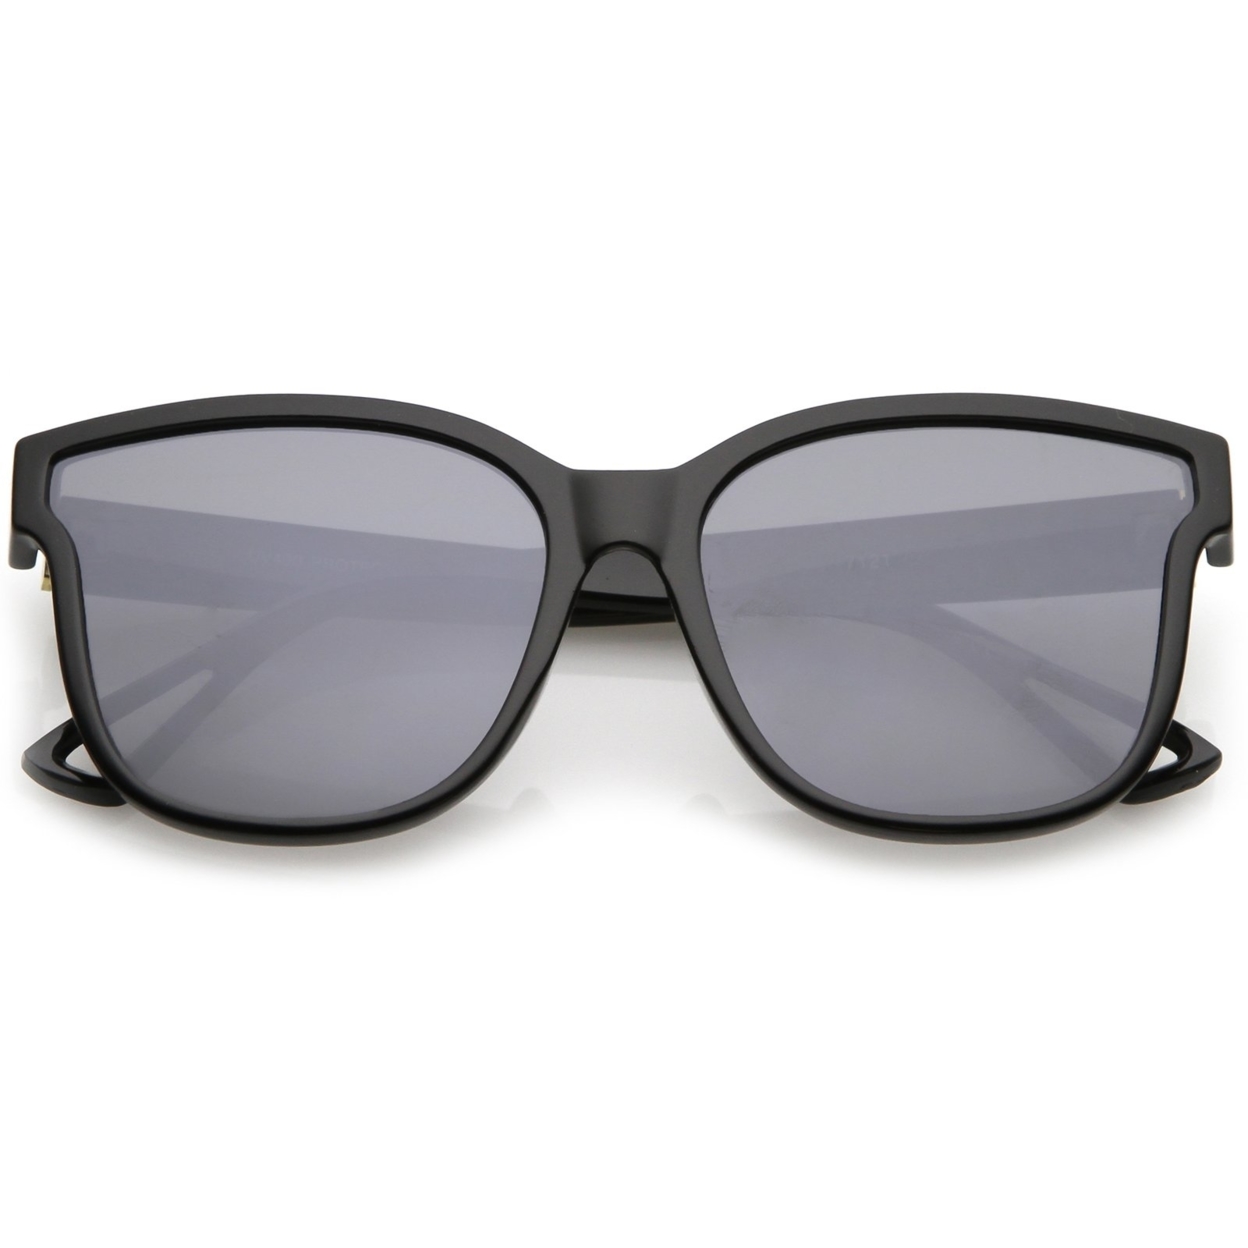 Women's Horn Rim Metal Accent Square Flat Lens Cat Eye Sunglasses 55mm - Shiny Clear / Green